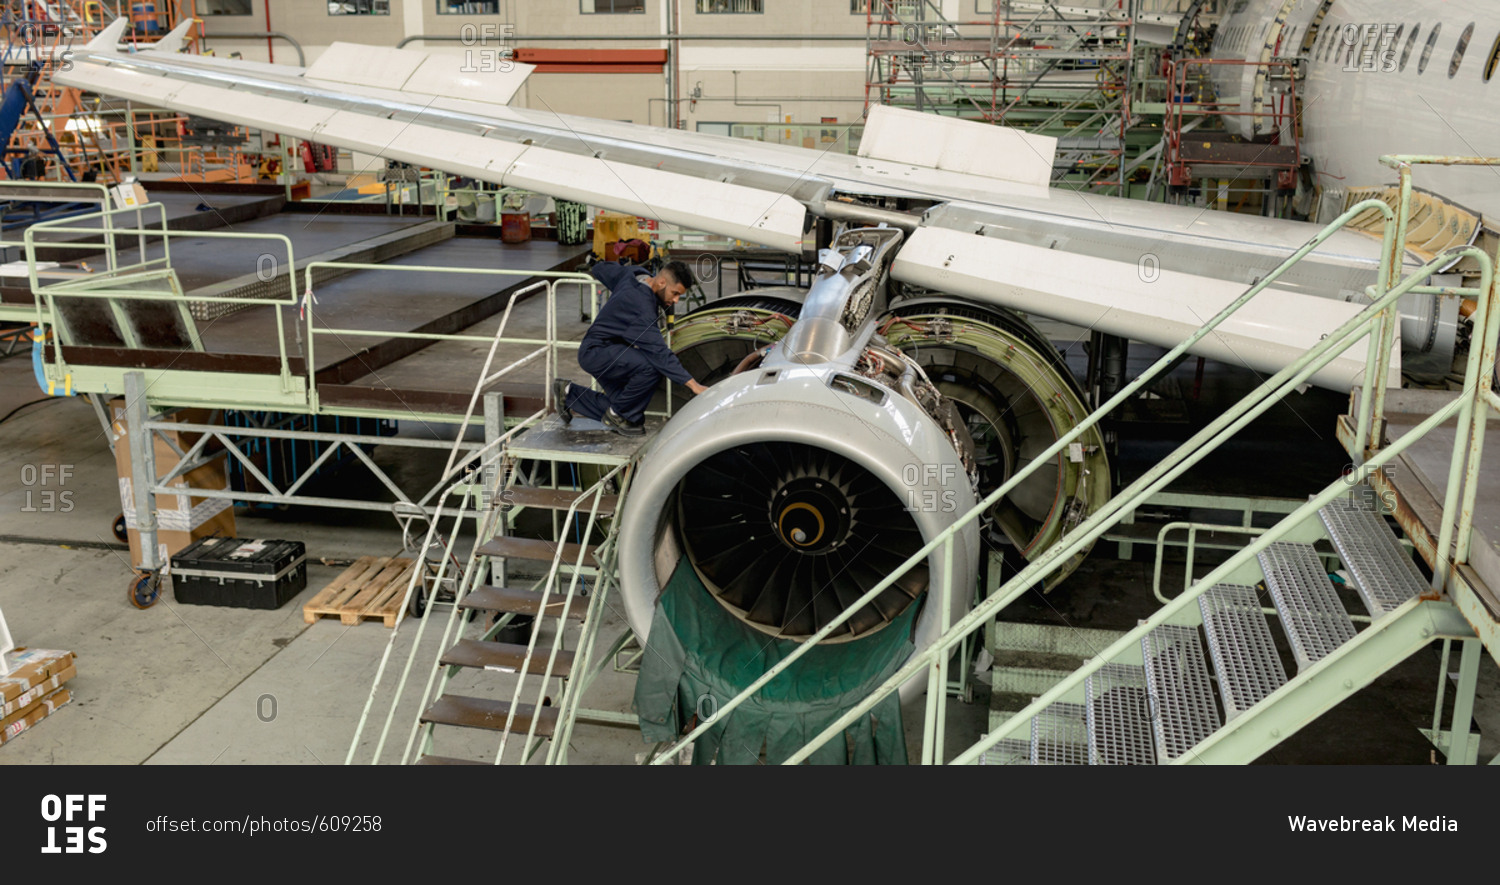 Aircraft maintenance engineer examining turbine engine of aircraft at airlines maintenance facility